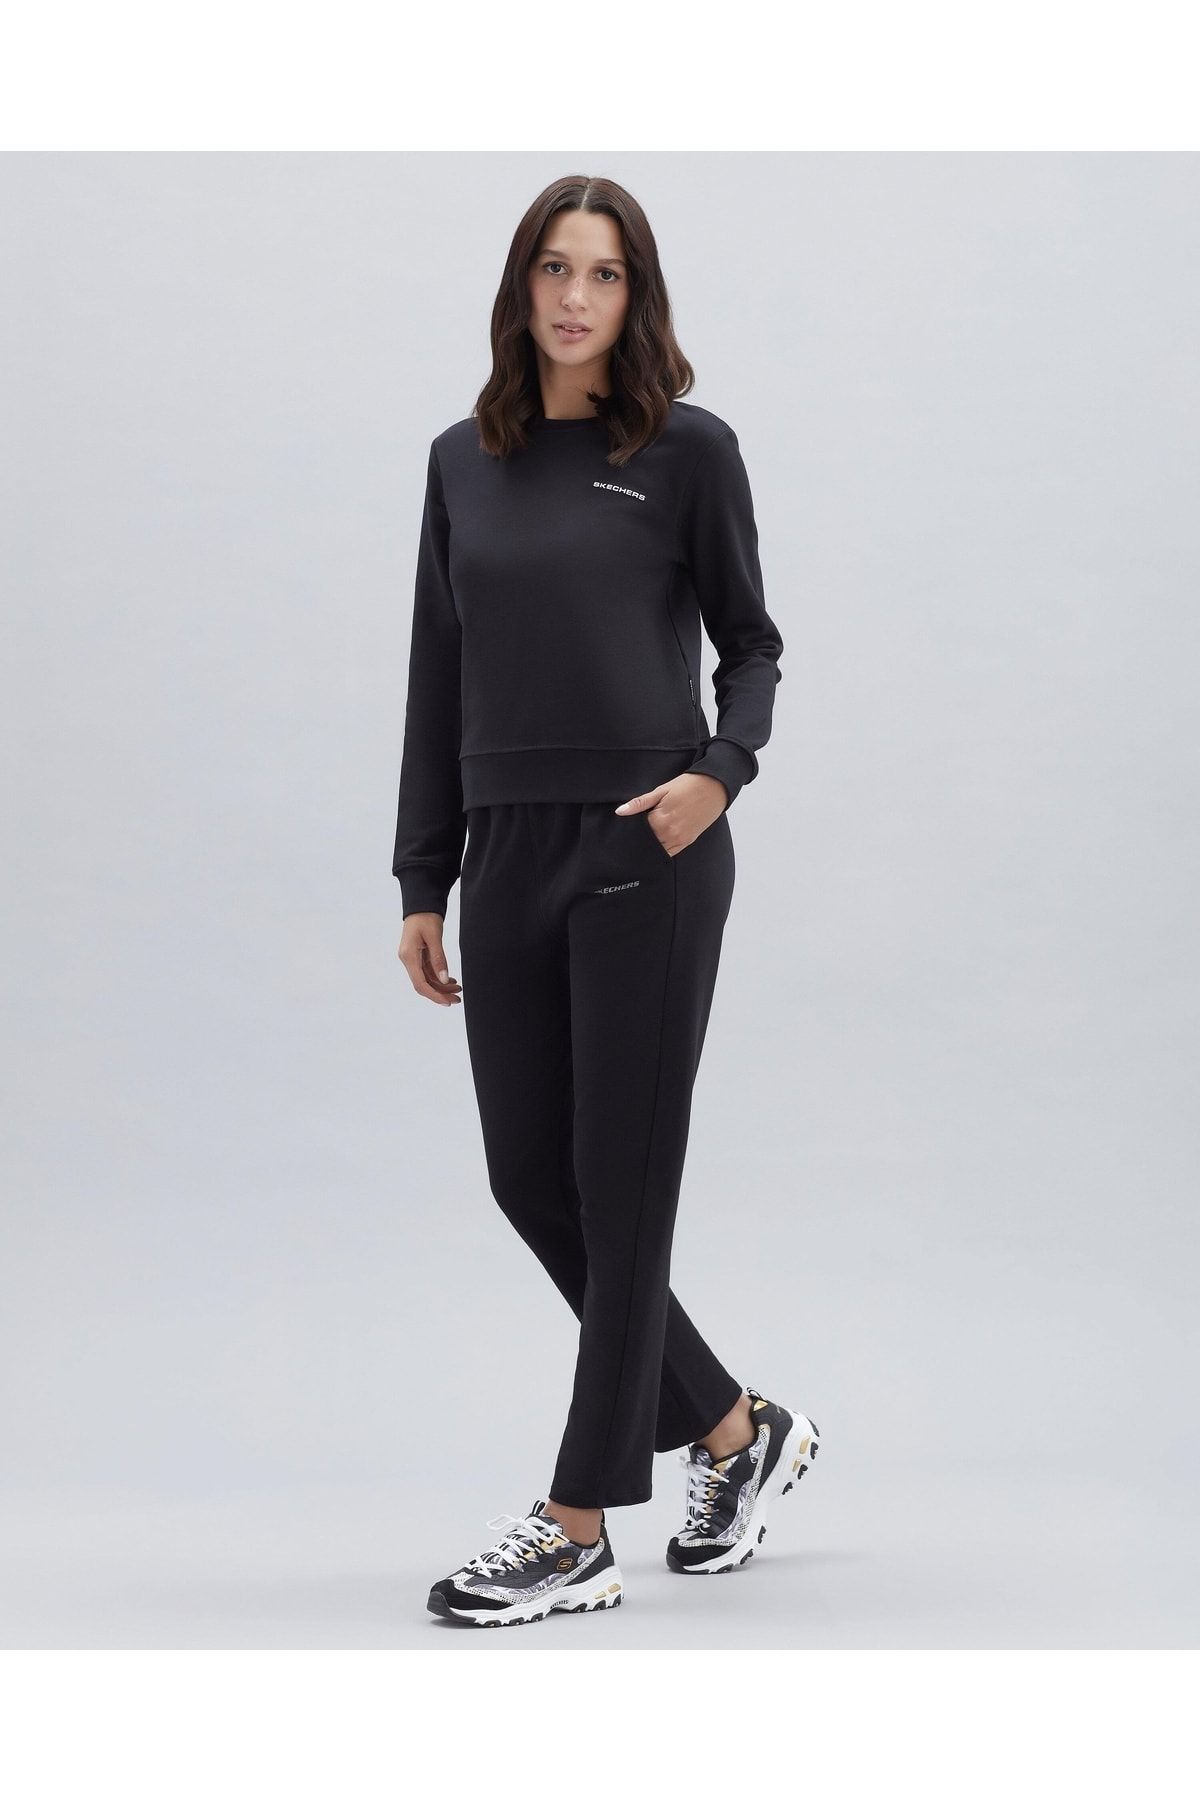 Skechers W New Basics Crew Neck Sweatshirt Kadın Sweatshirt S212182-001 Black